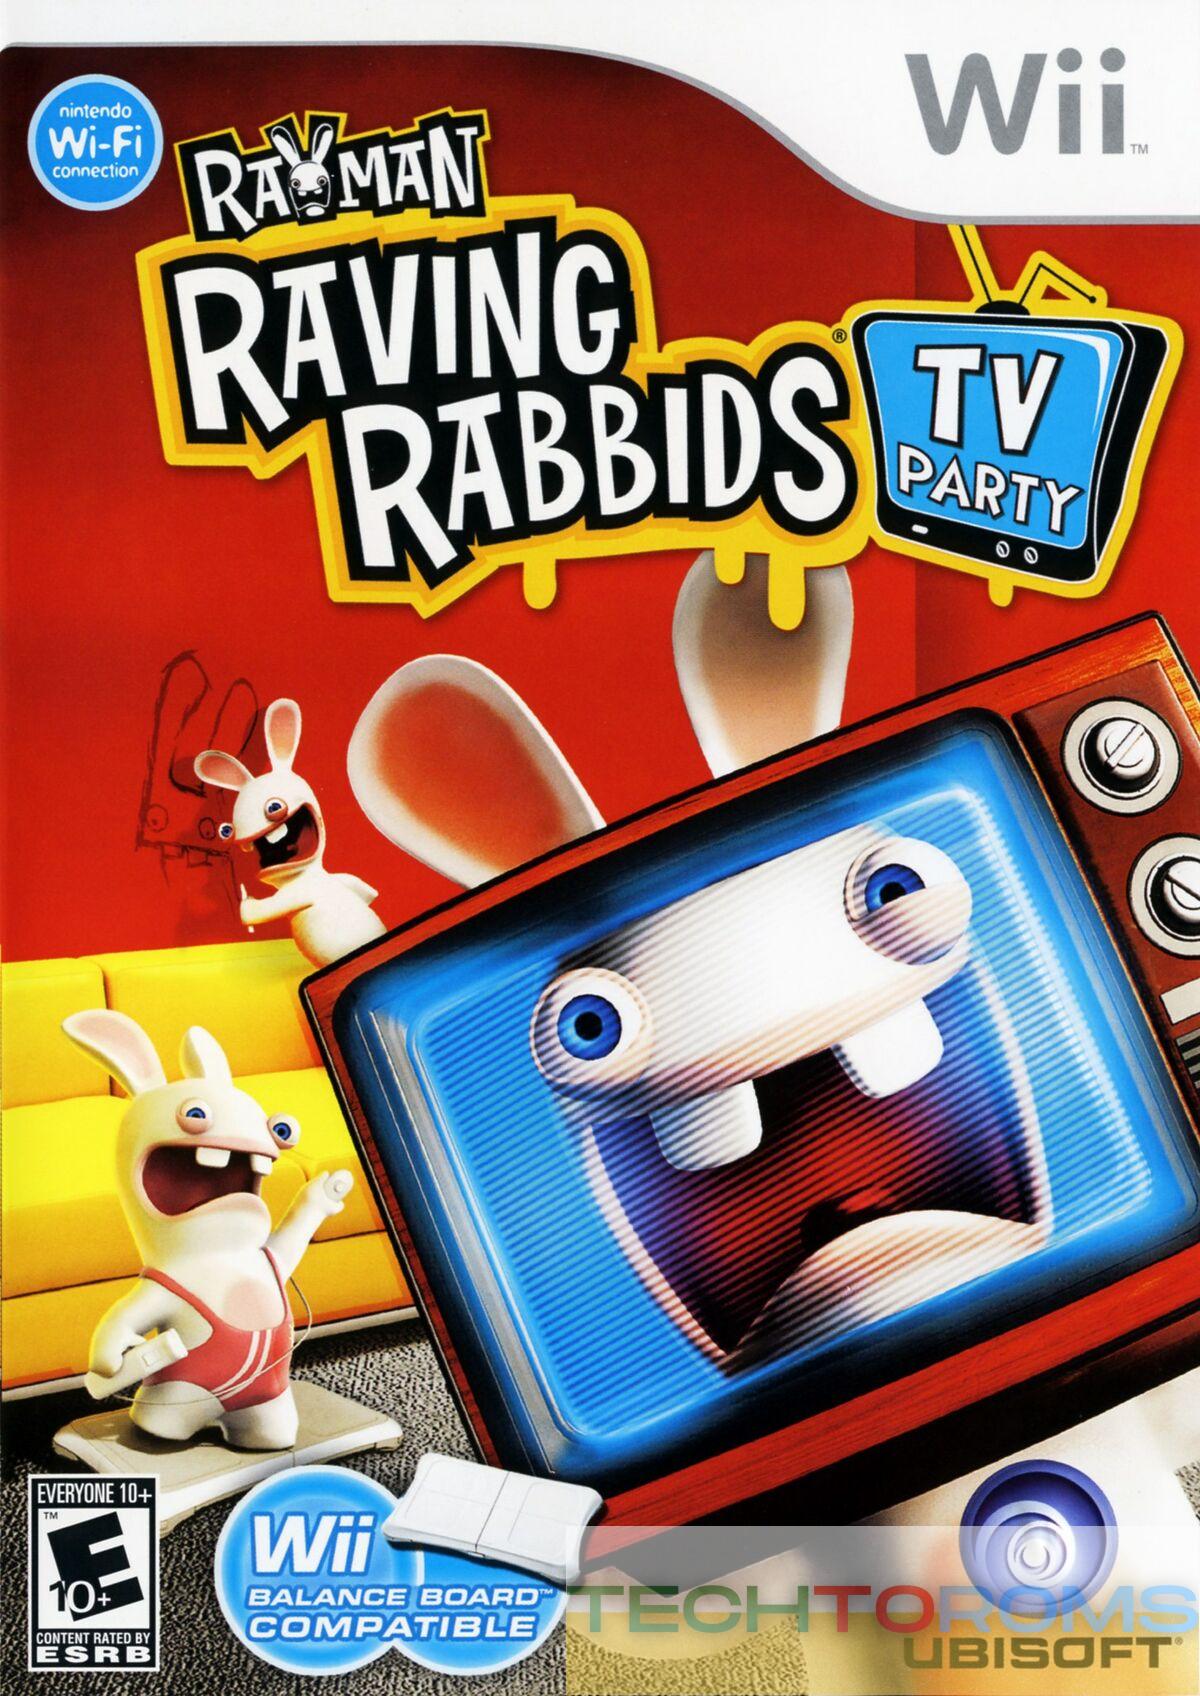 Rayman Raving Rabbids: Fiesta televisiva